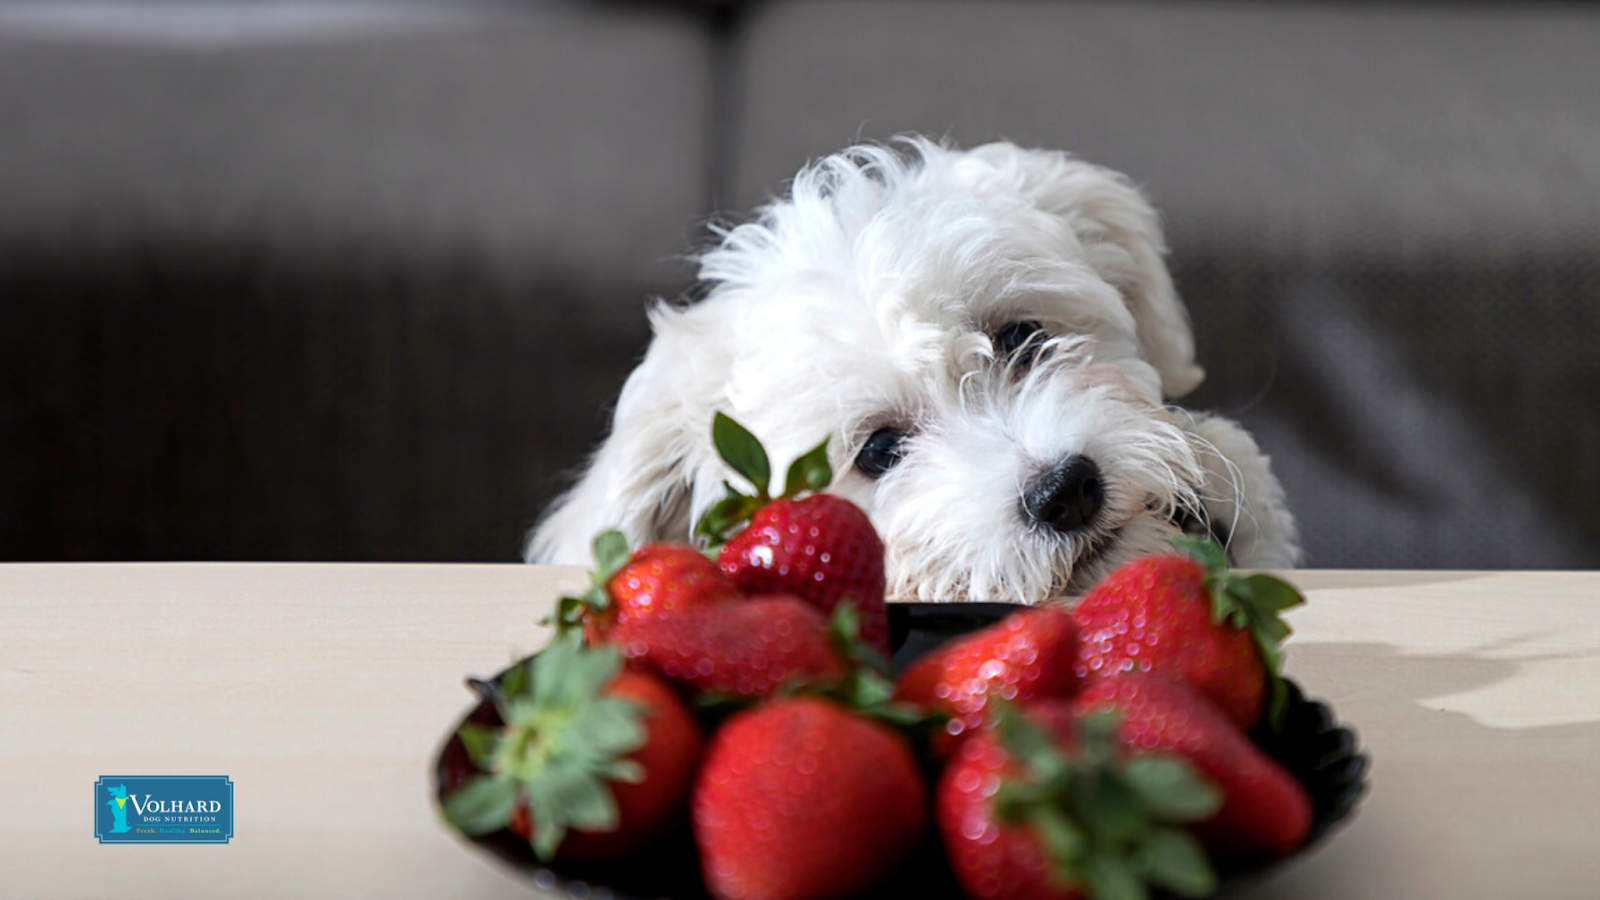 Dog looking at strawberries